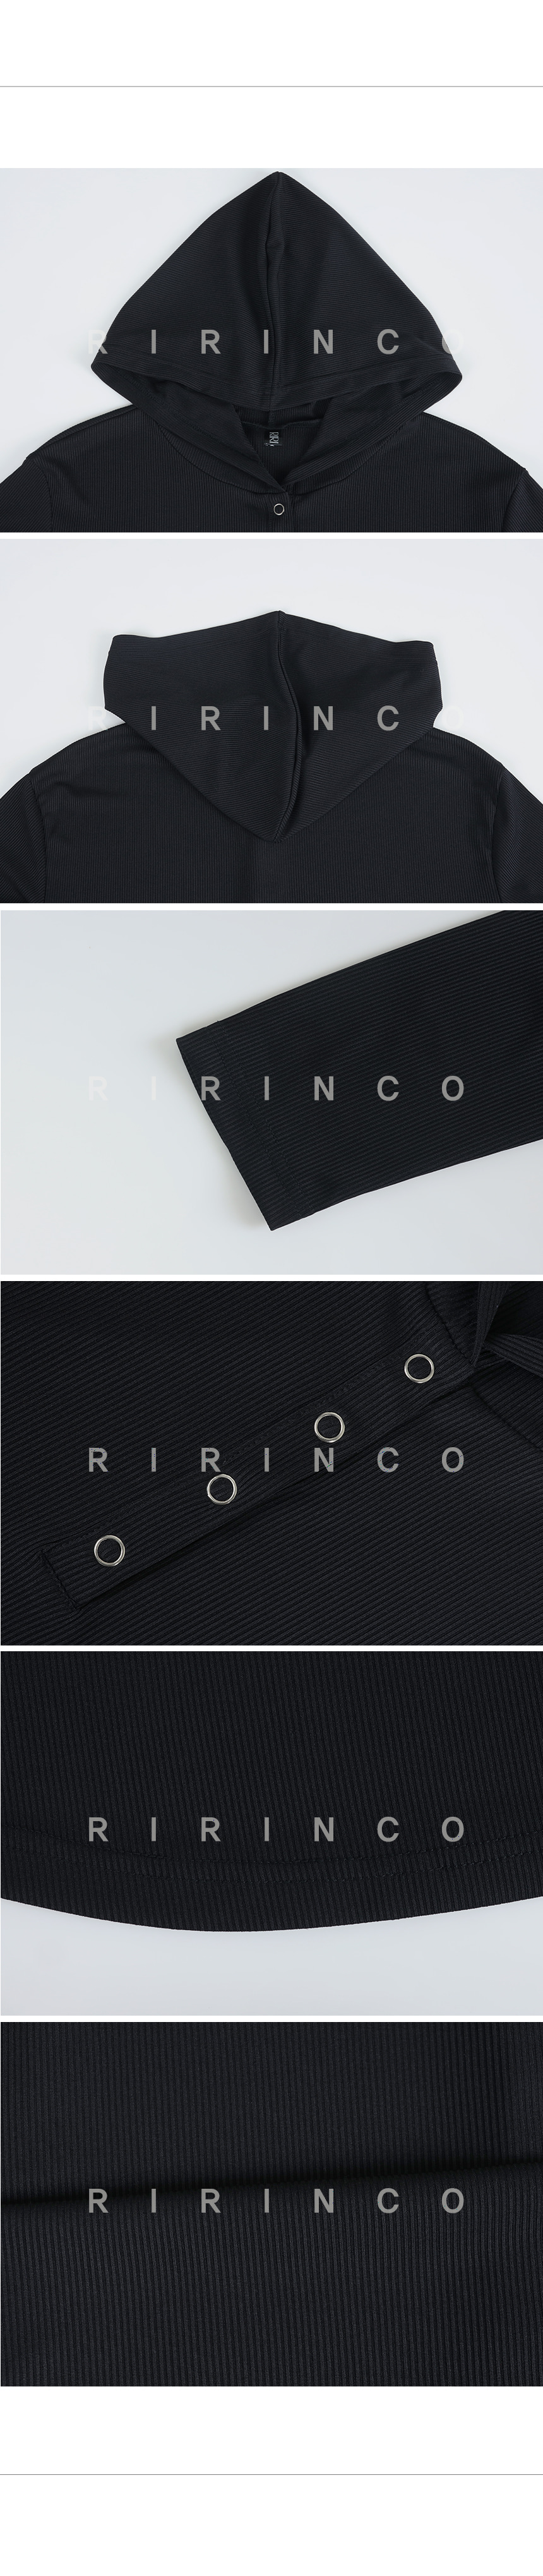 RIRINCO リブフード付きベーシックTシャツ